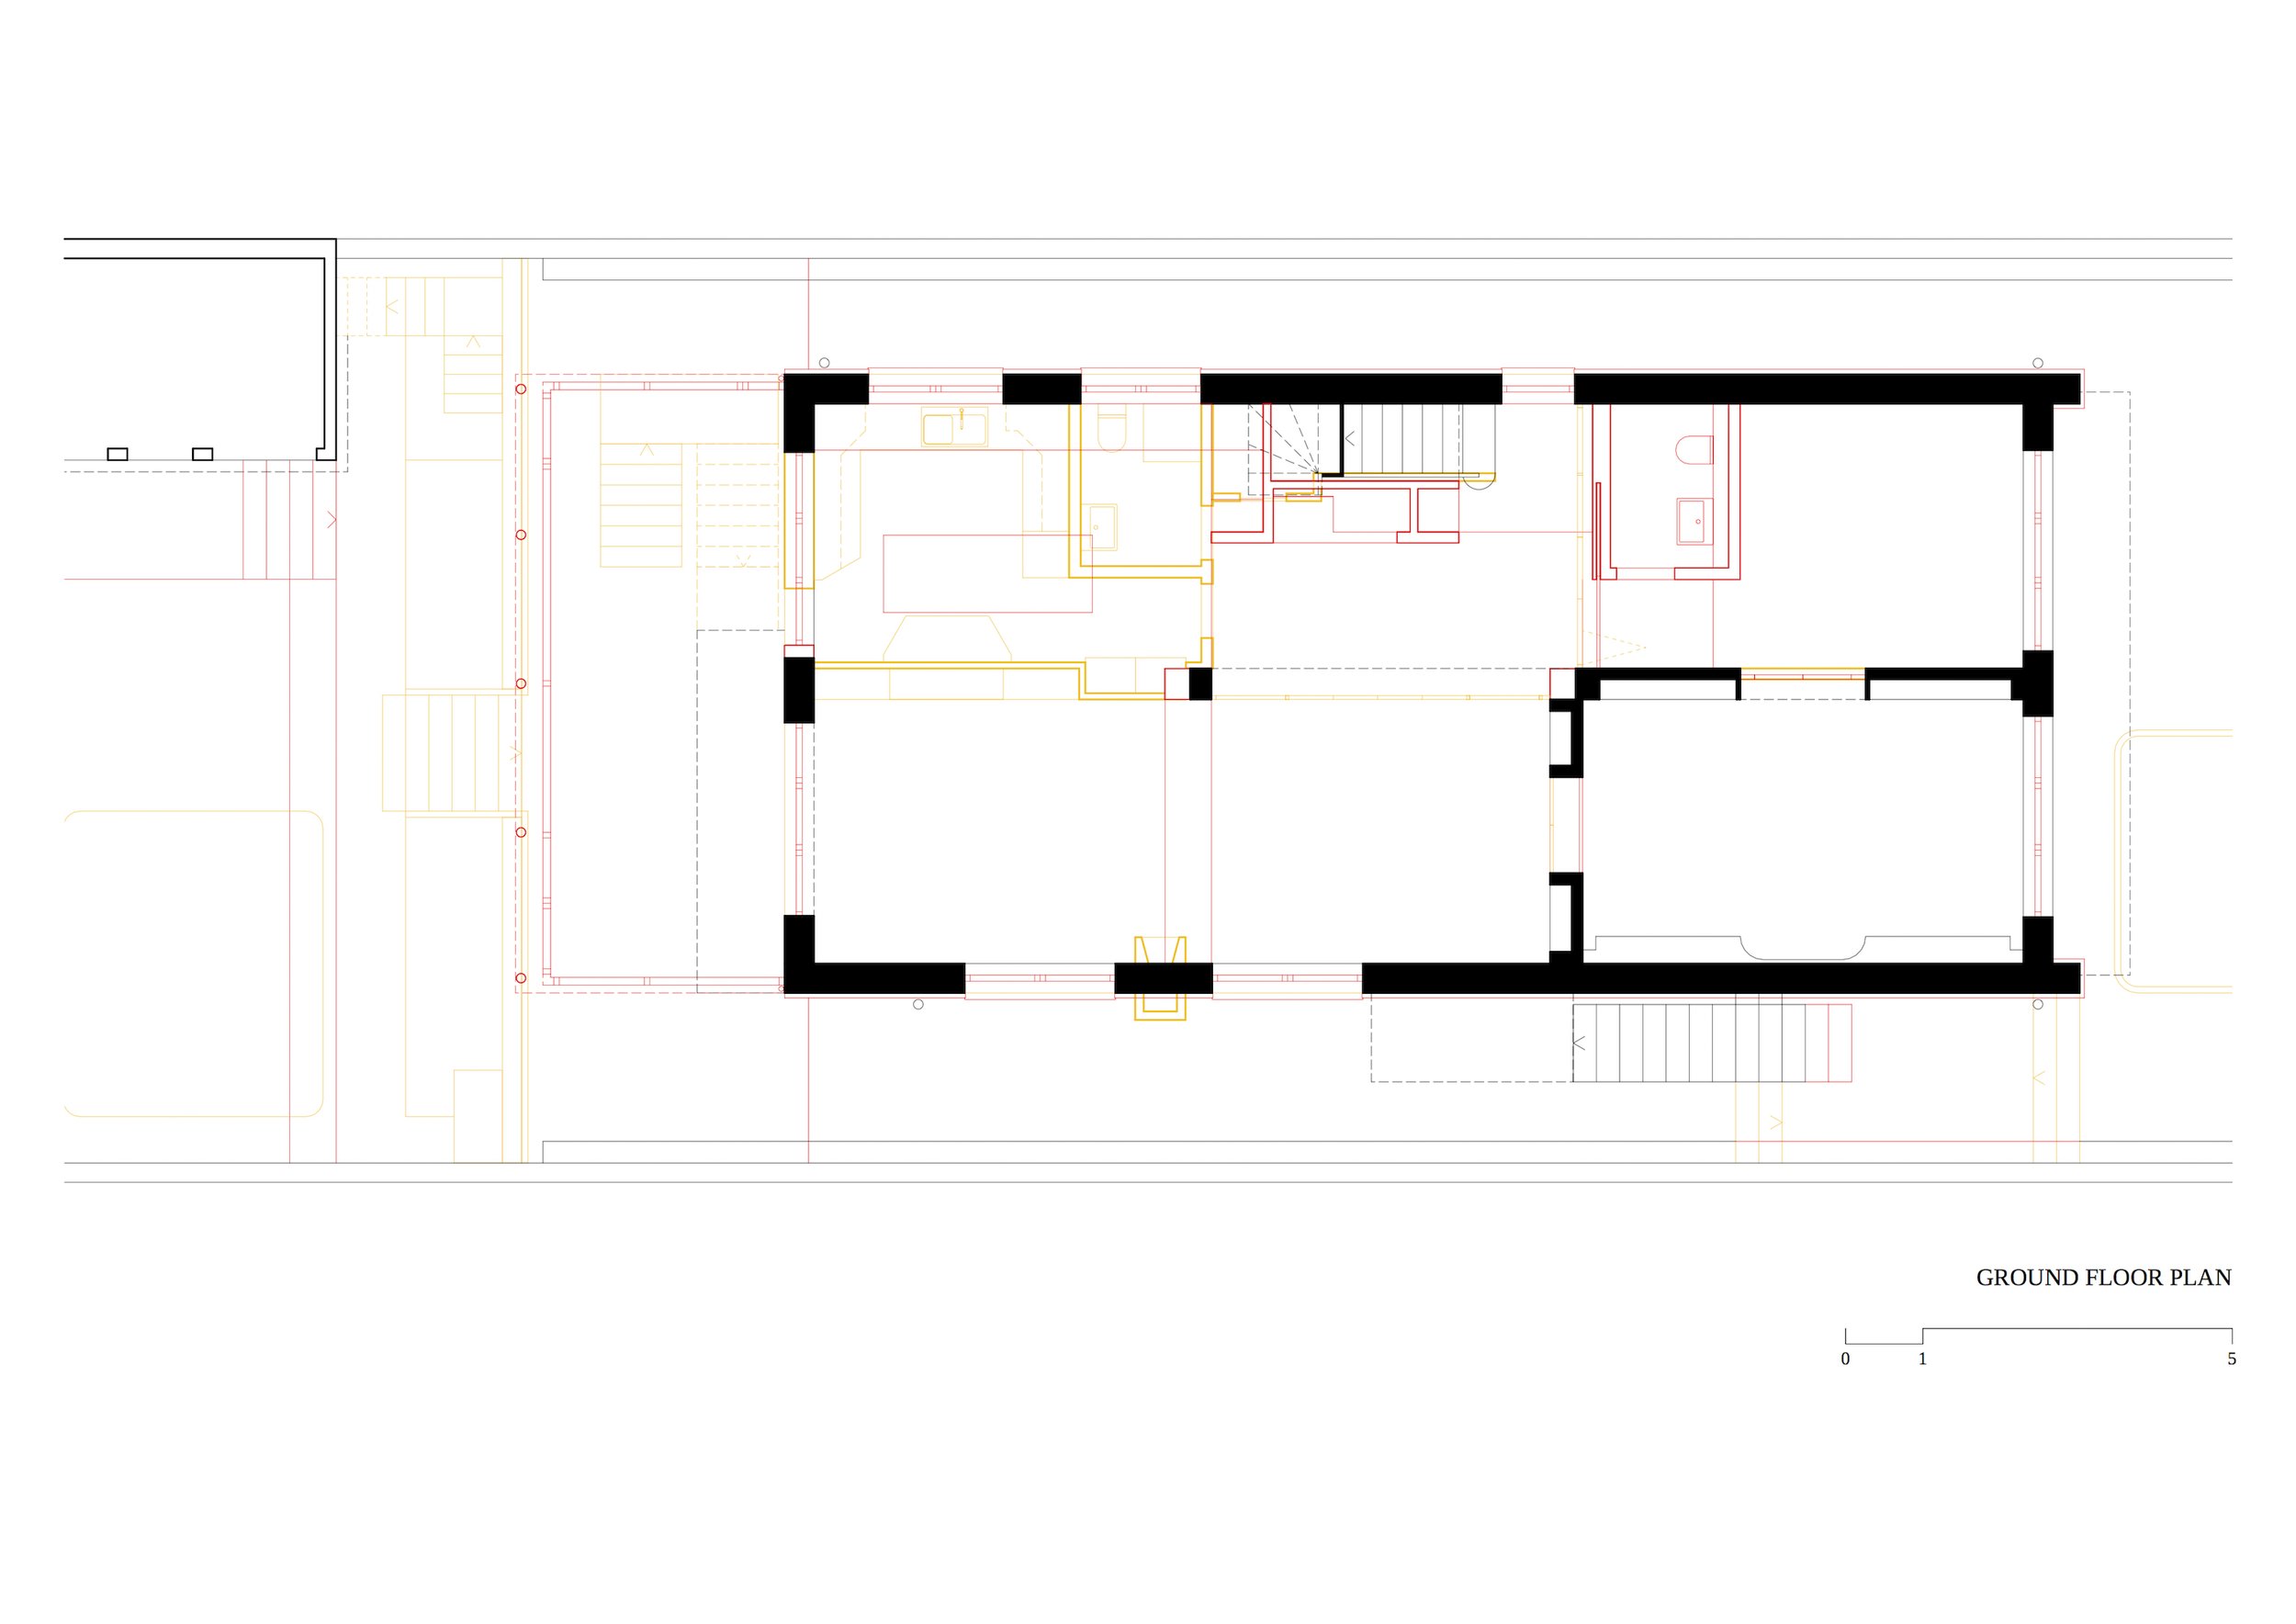 OITOO_OLIDOURO_Ground Floor Plan_YR.jpg